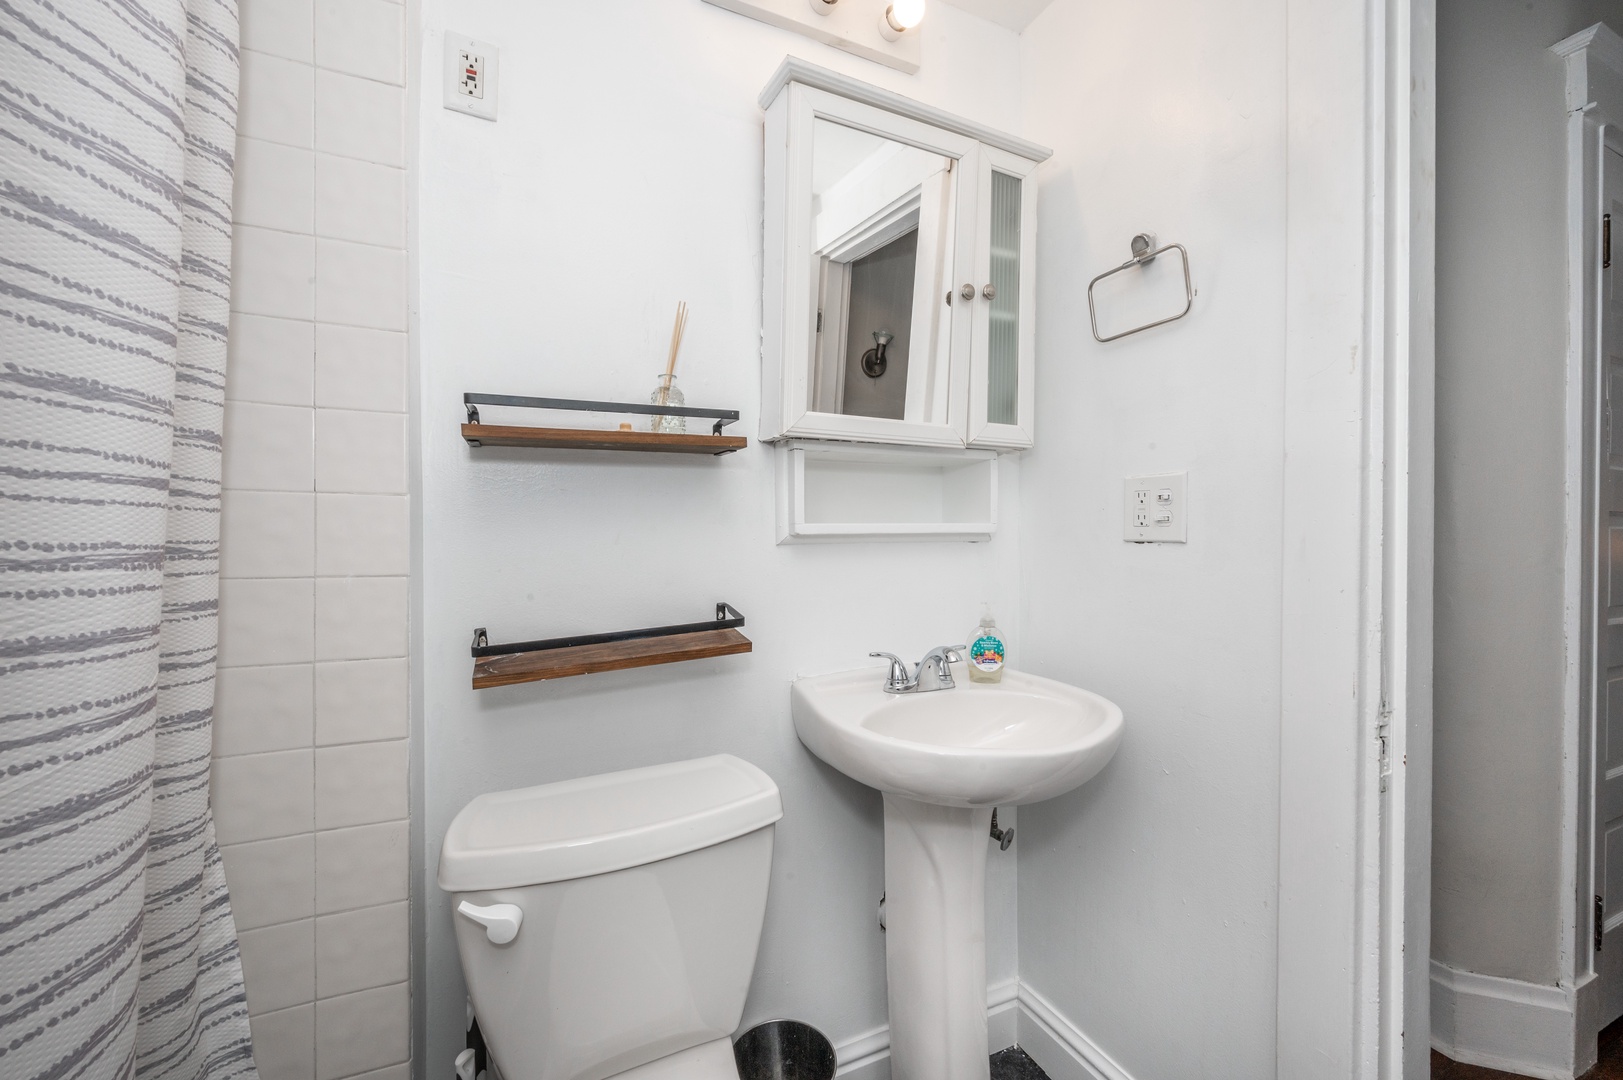 A pedestal sink & shower/tub combo await in the full bathroom